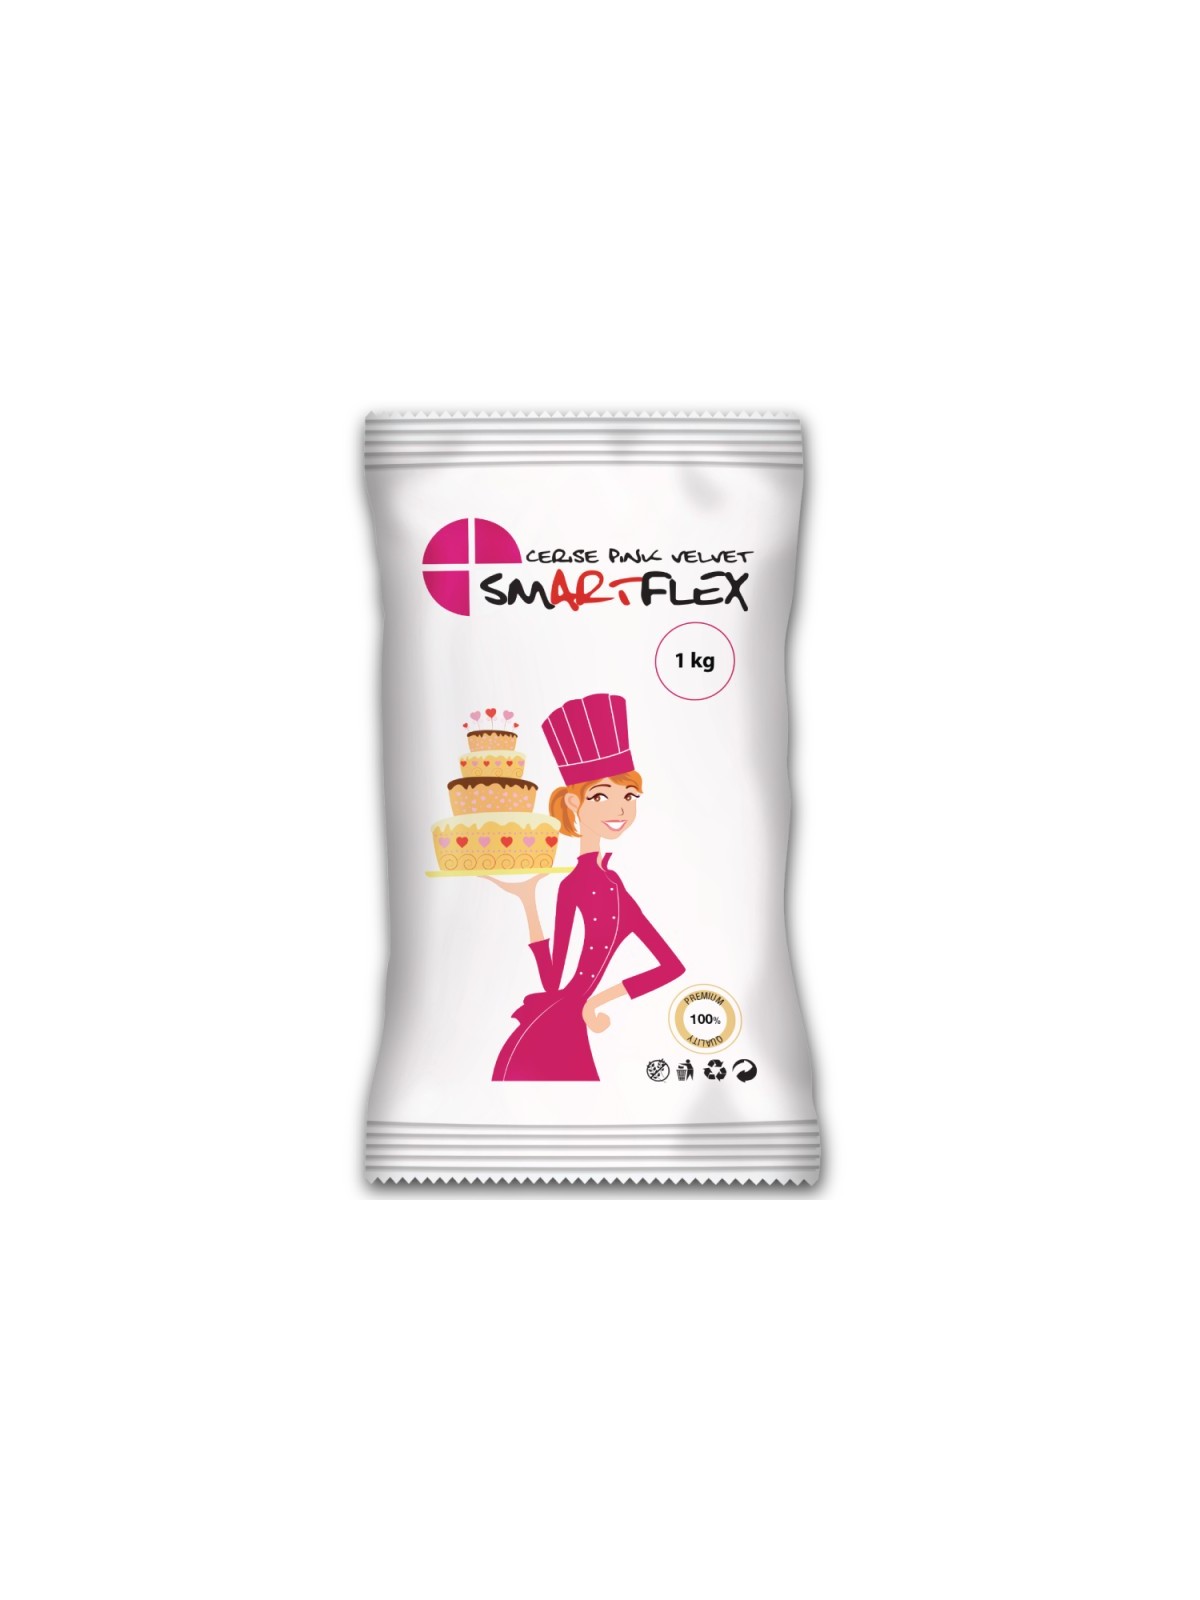 Smartflex Cerise  Pink velvet vanilla 1kg - fondant